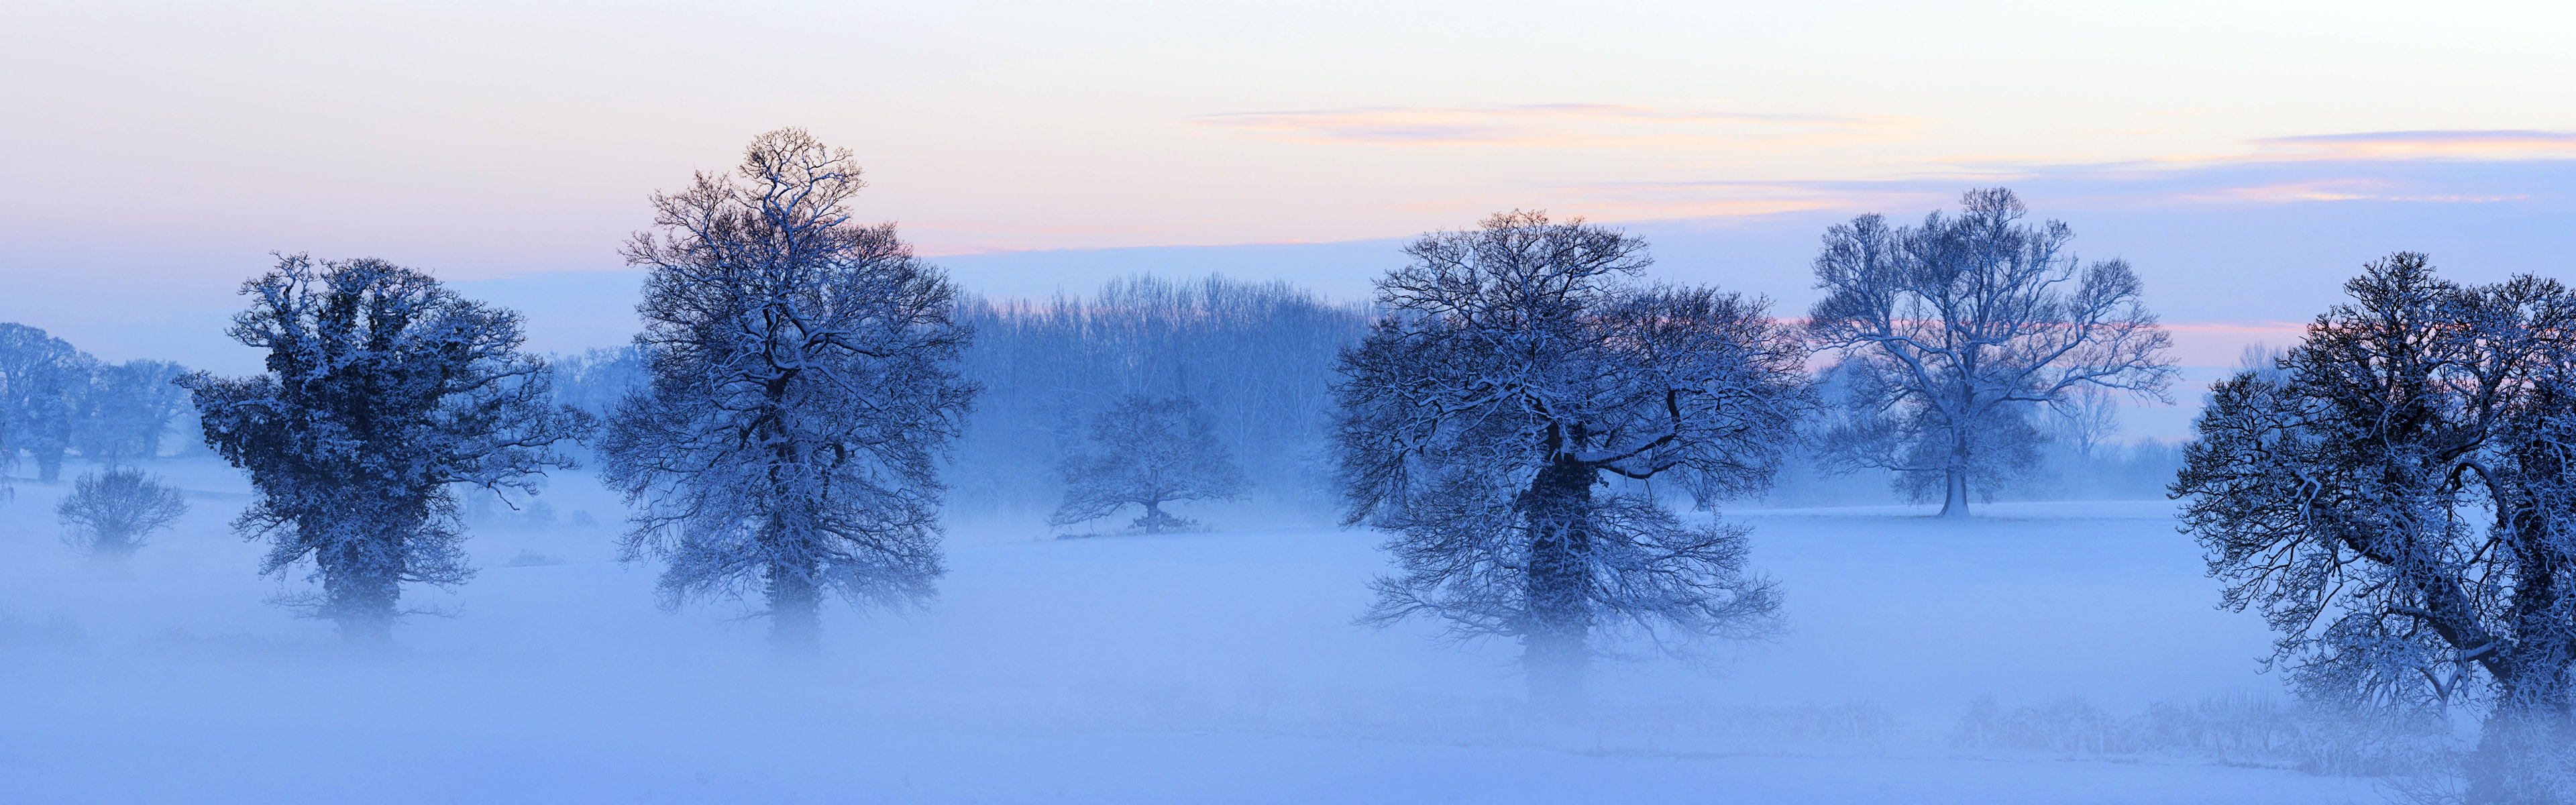 Schöne kalten Winter Schnee, Windows 8 Panorama-Widescreen-Wallpaper #6 - 3840x1200